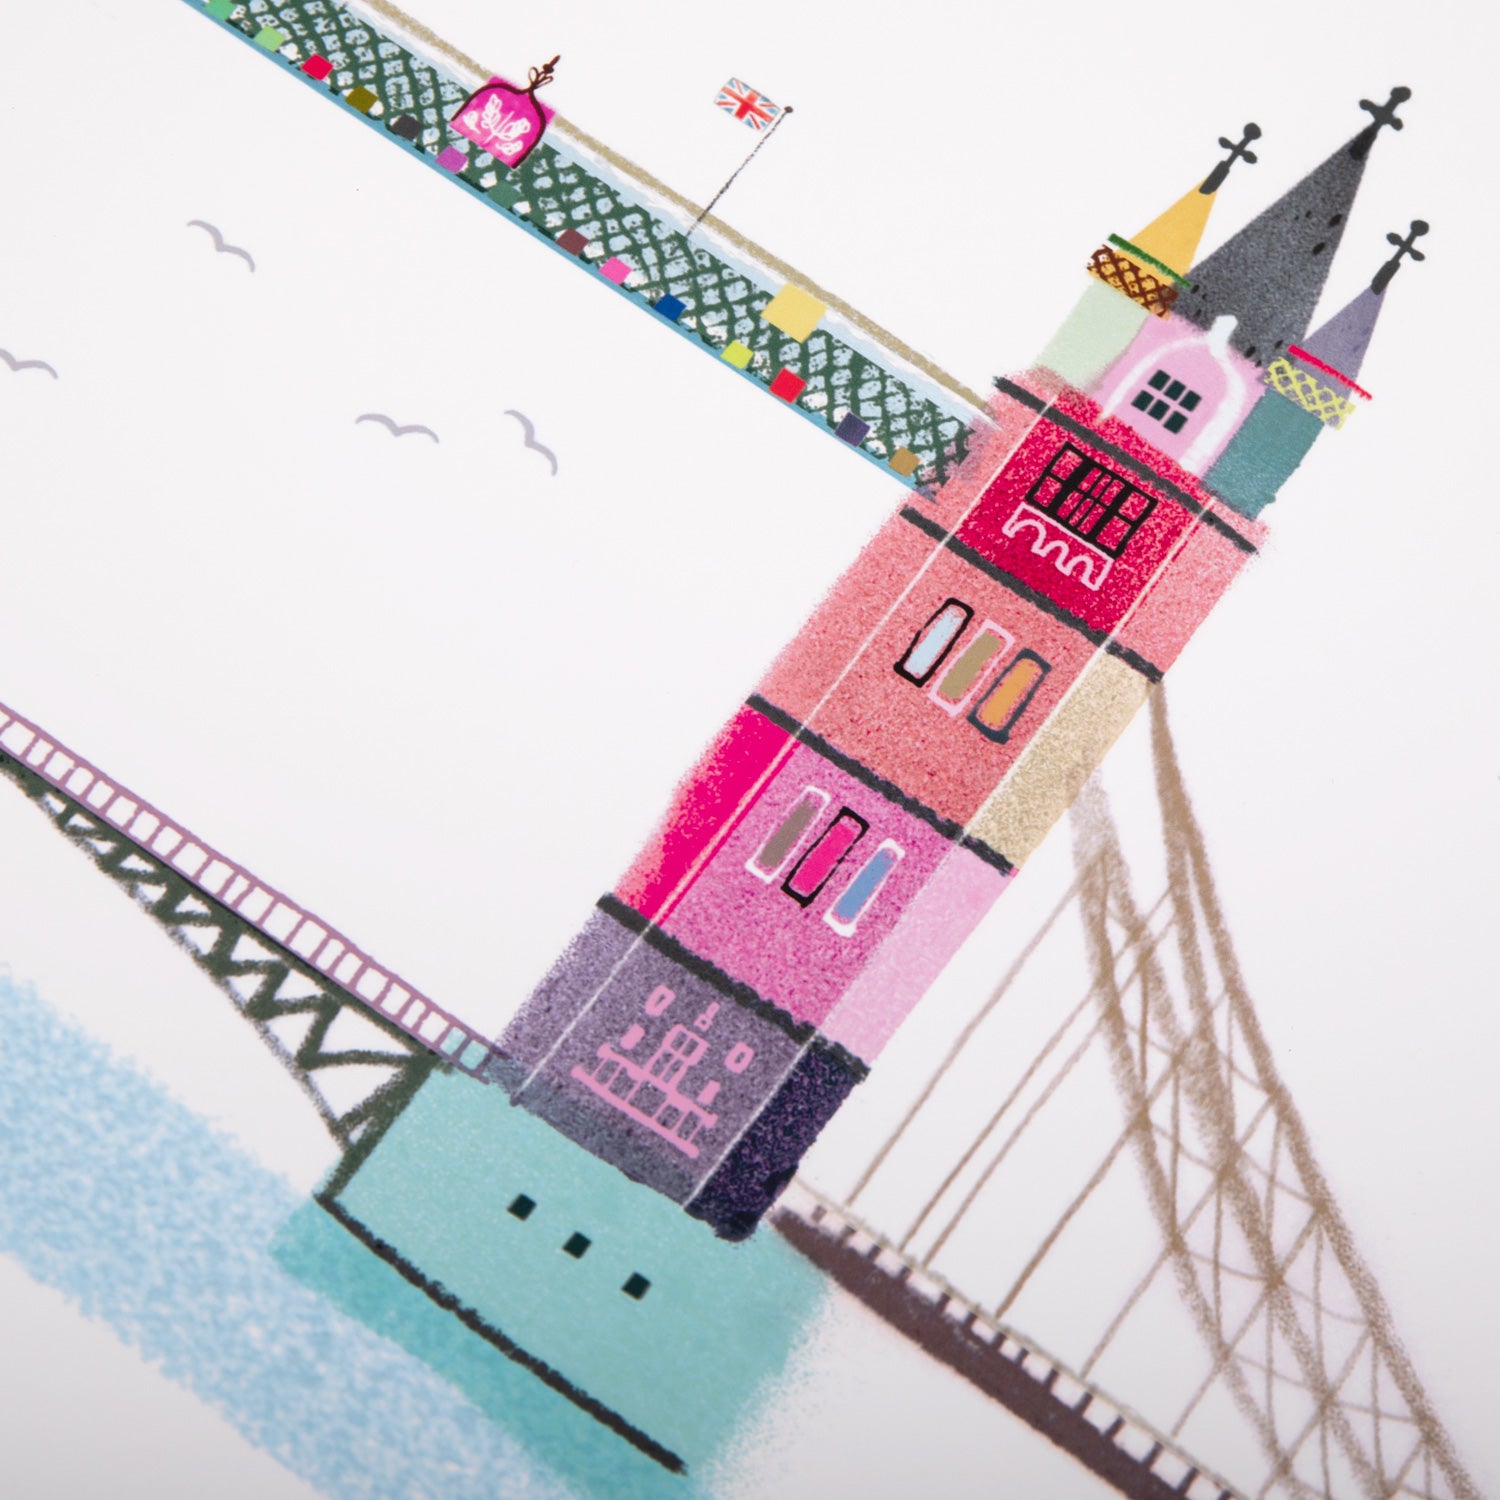 I Drew This - Tower Bridge A3 Print 2